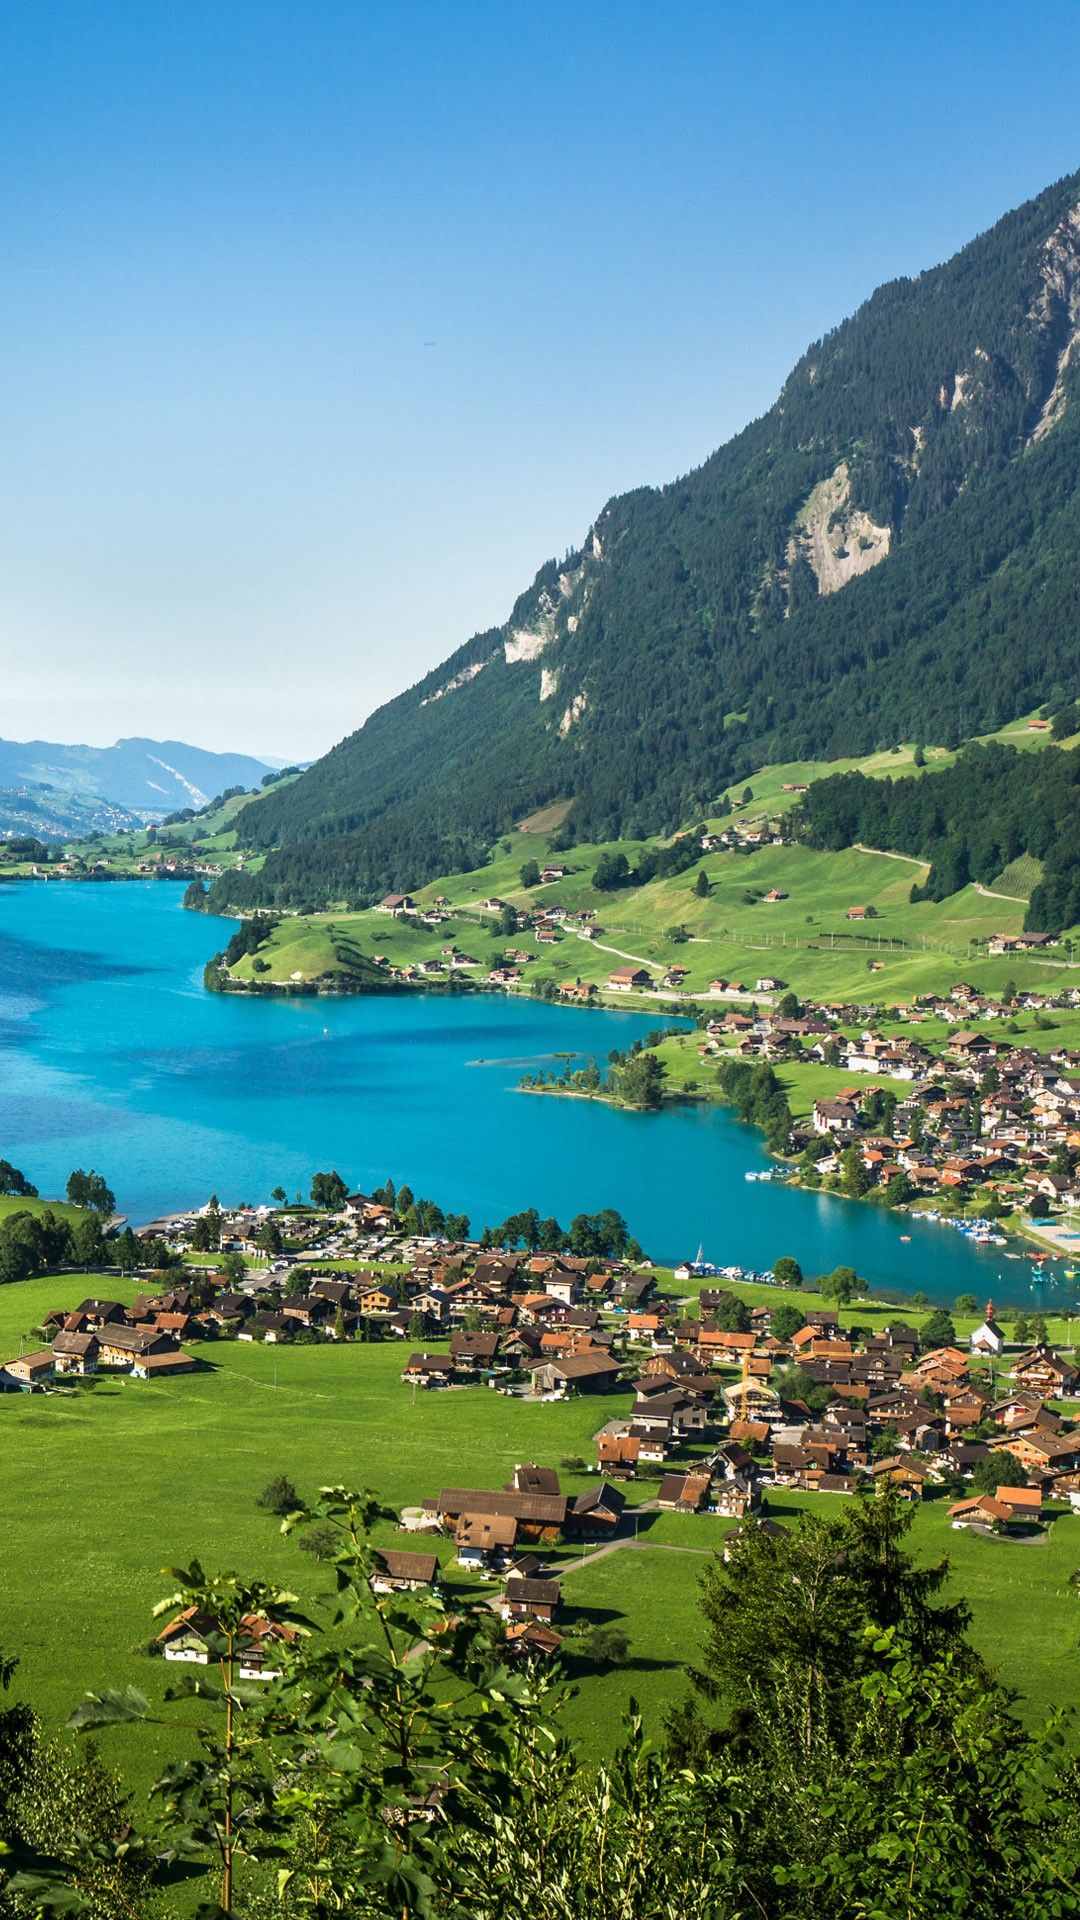 Town and Lake Lungern (Lungerersee) view from Bruenigpass, Obwalden, Switzerland. Windows 10 Spotlight Image